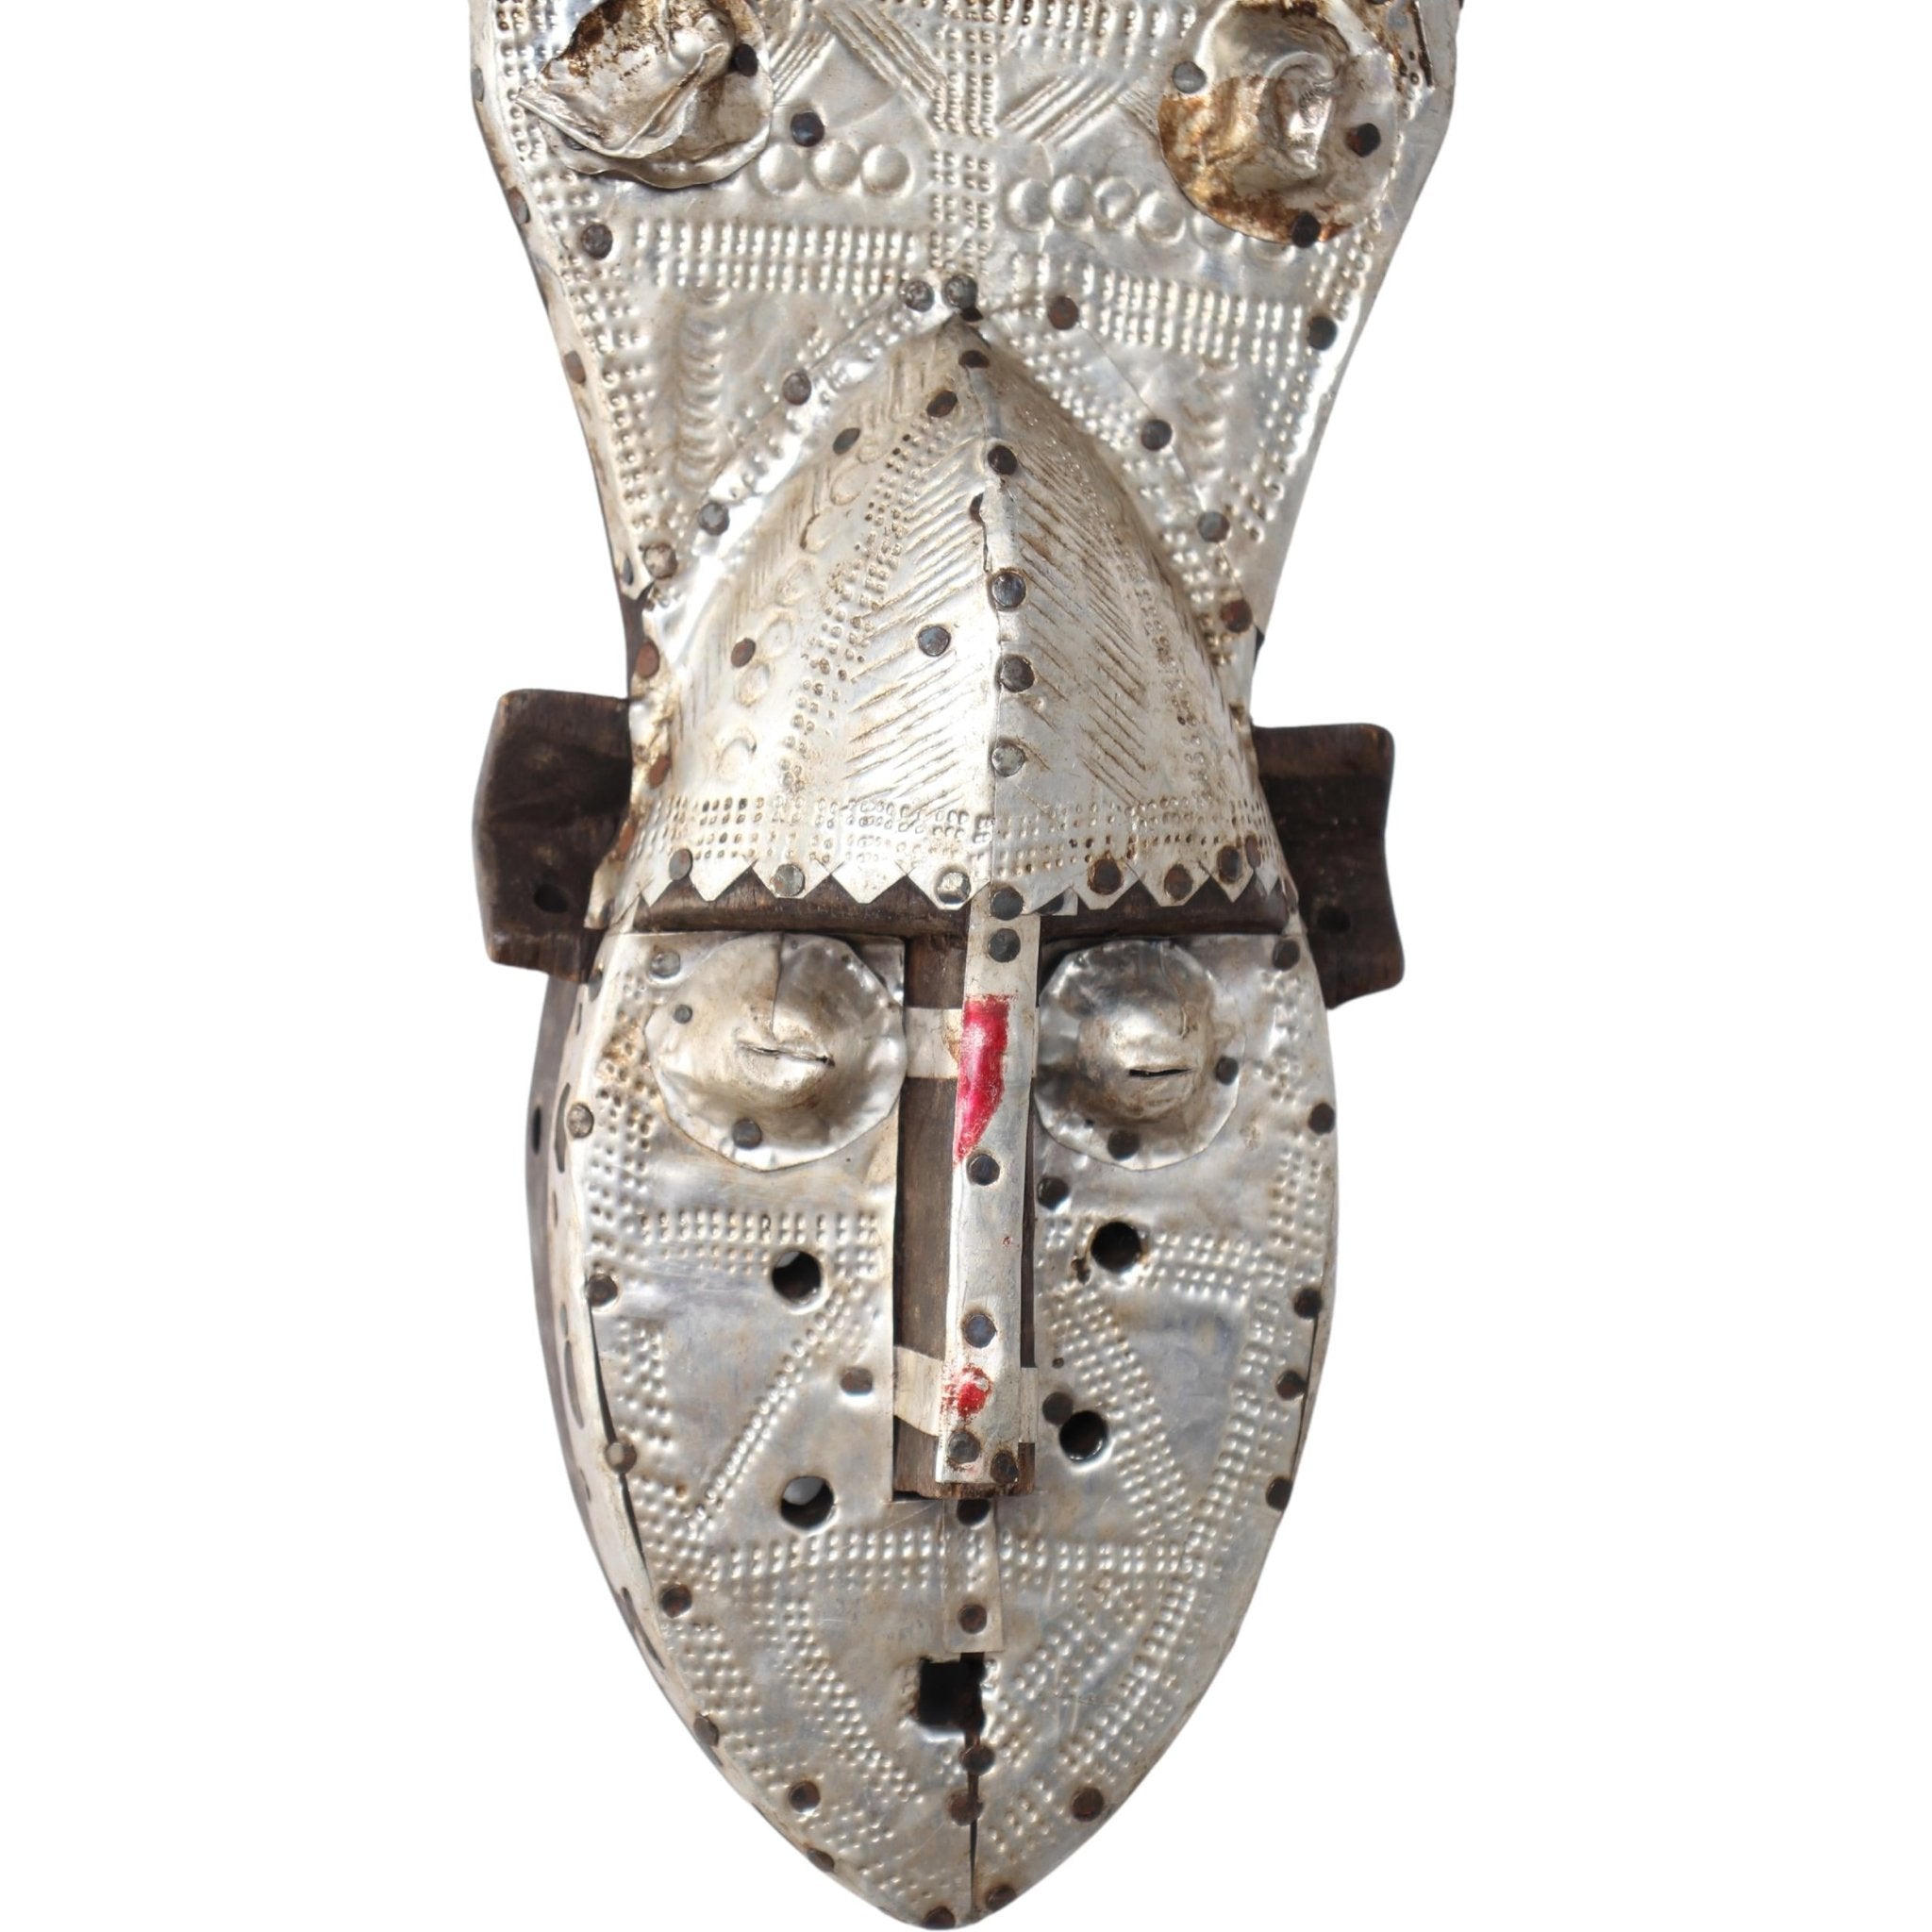 Bambara (Bamana) Tribe Mask ~15.4" Tall - African Angel Art - Mask